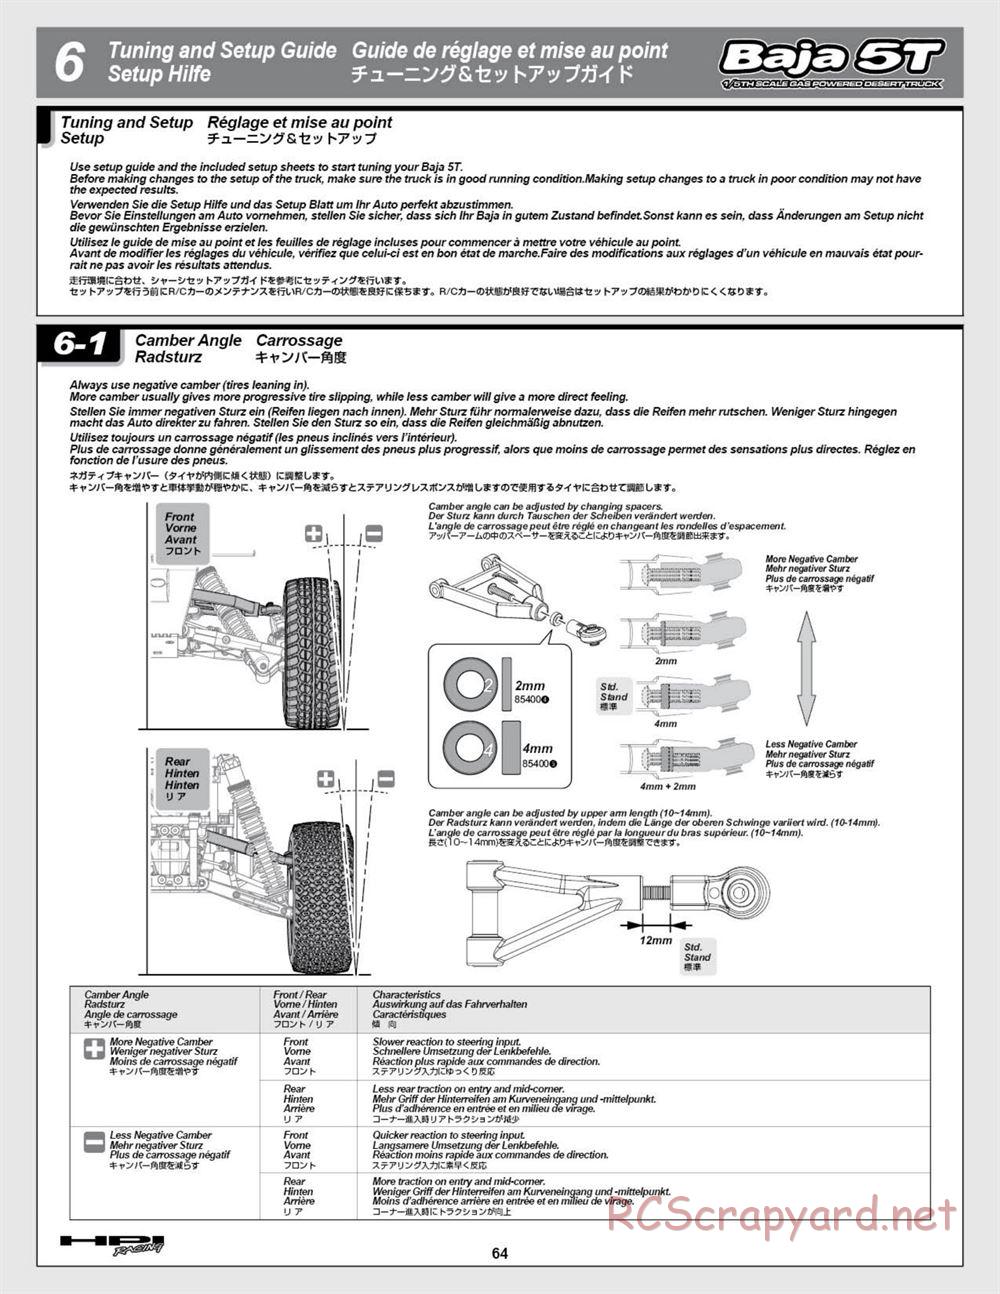 HPI - Baja 5T (2008) - Manual - Page 64